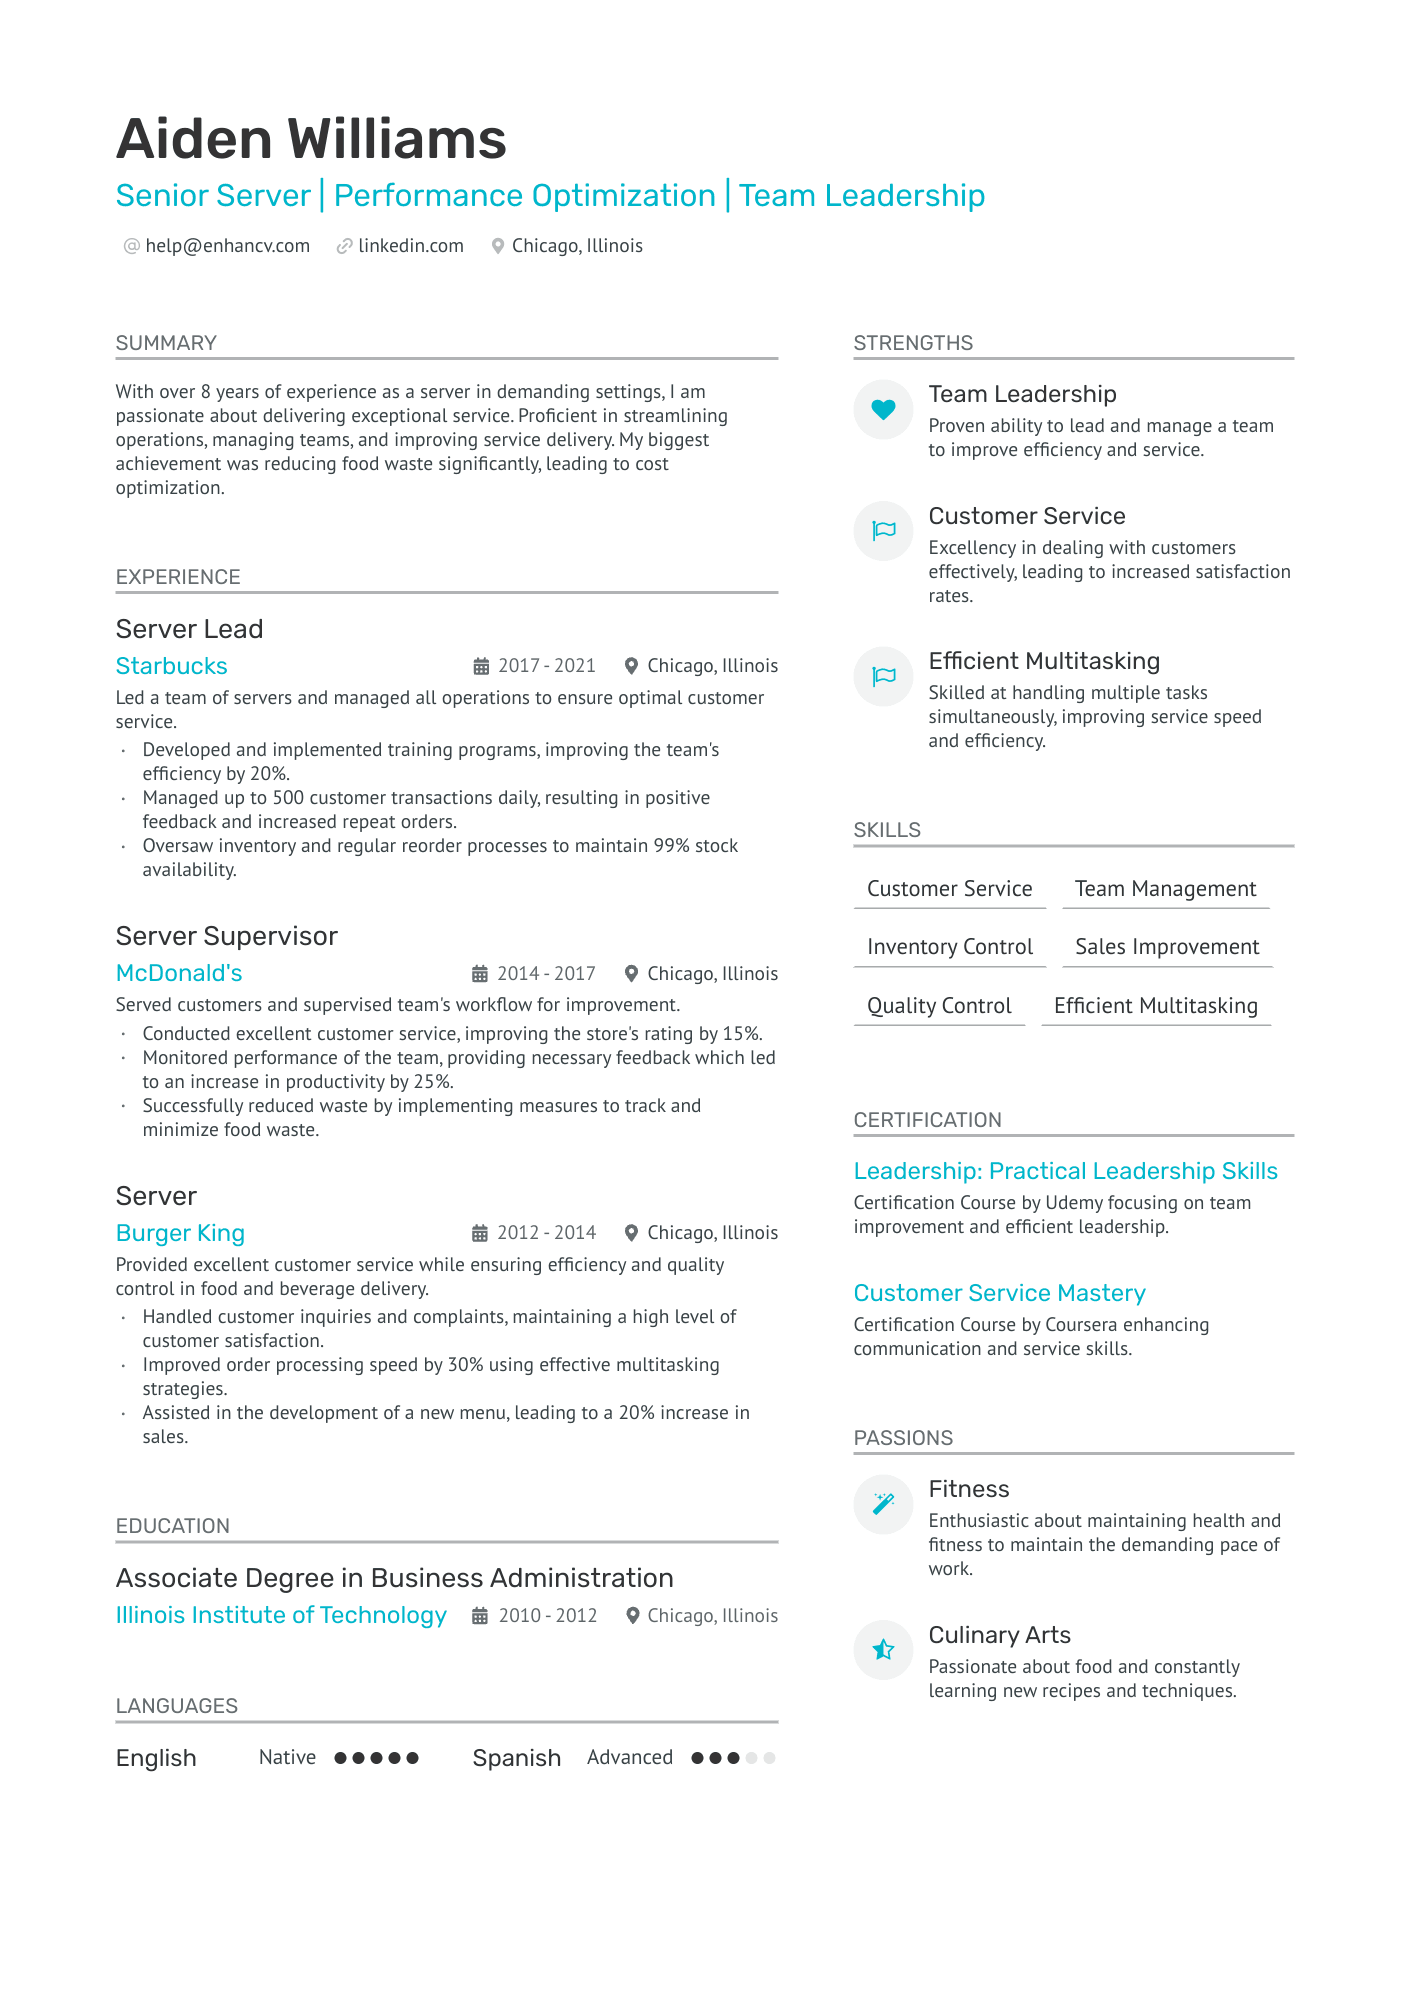 Senior Server Resume Example